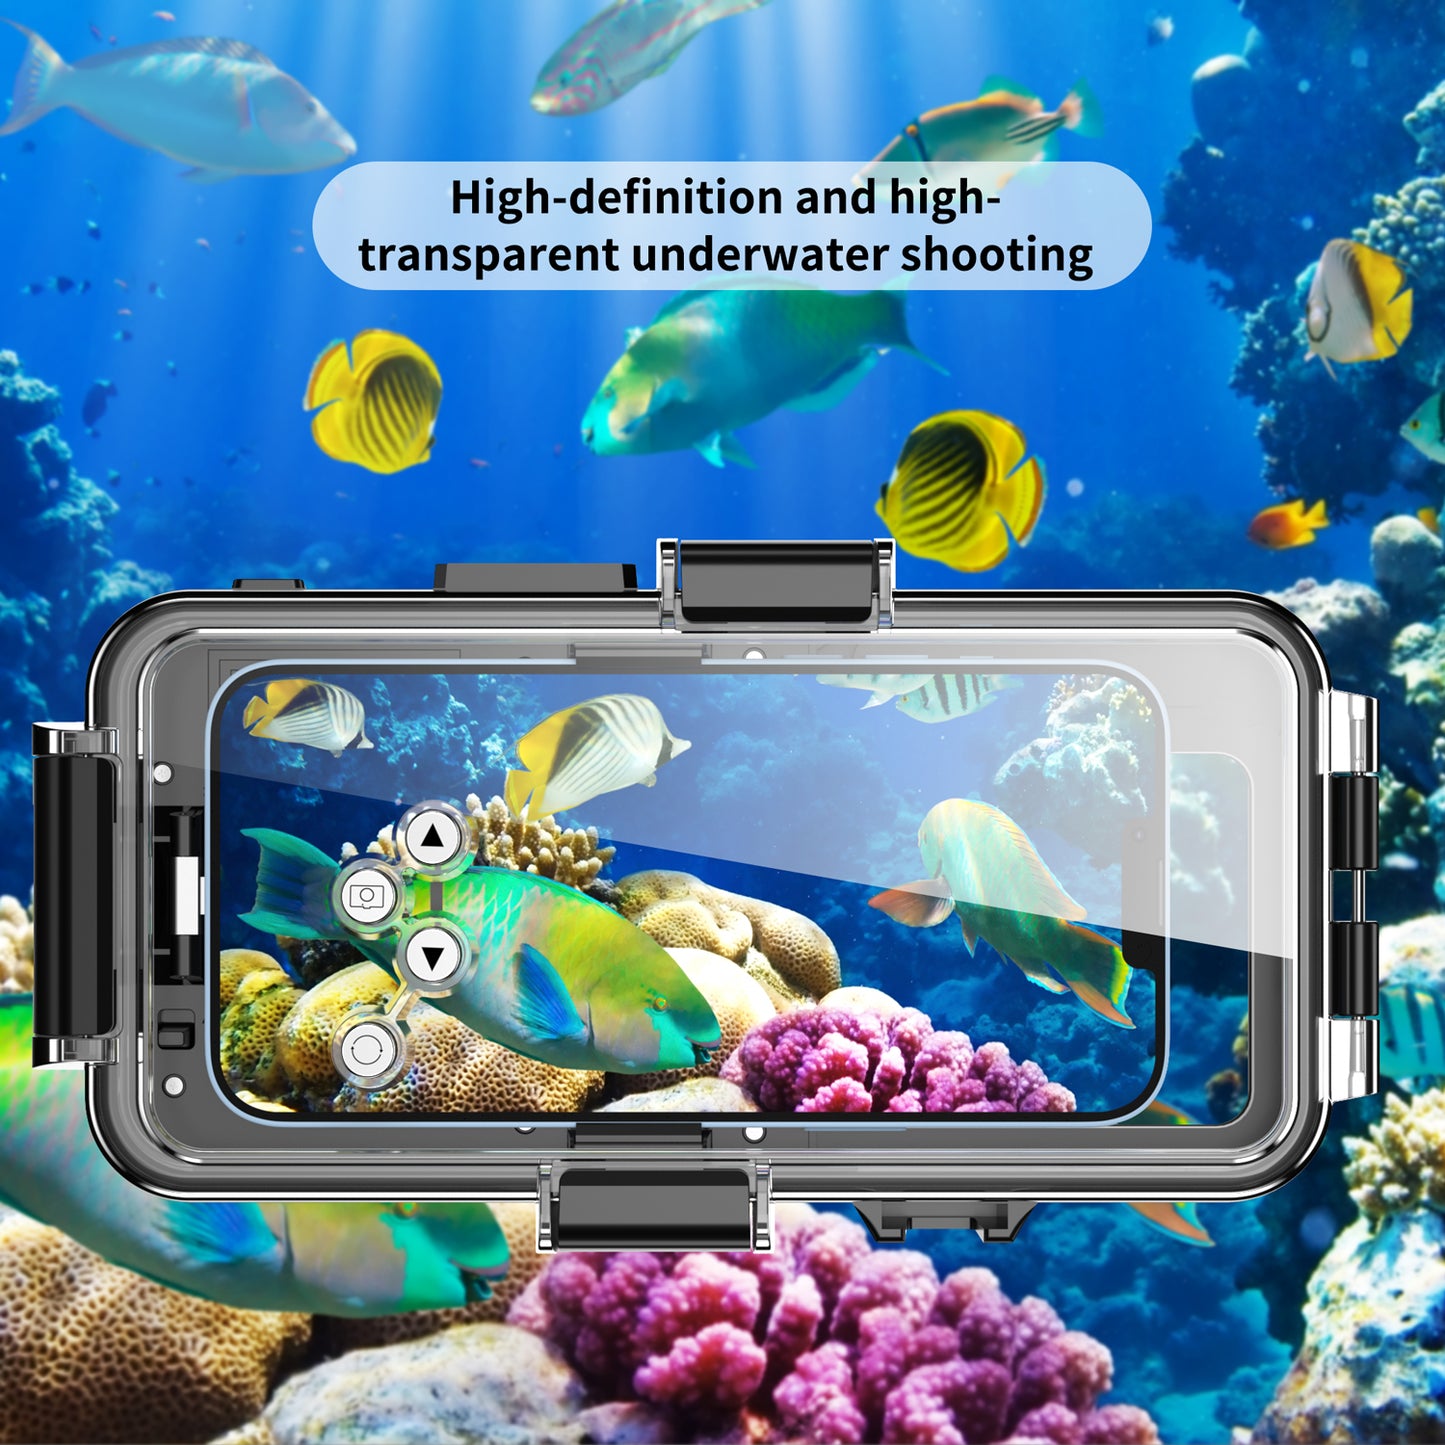 Apple iPhone 13 Pro Max Case Waterproof Under Sea 30 Meters Profession Diving Take Photoes Videos